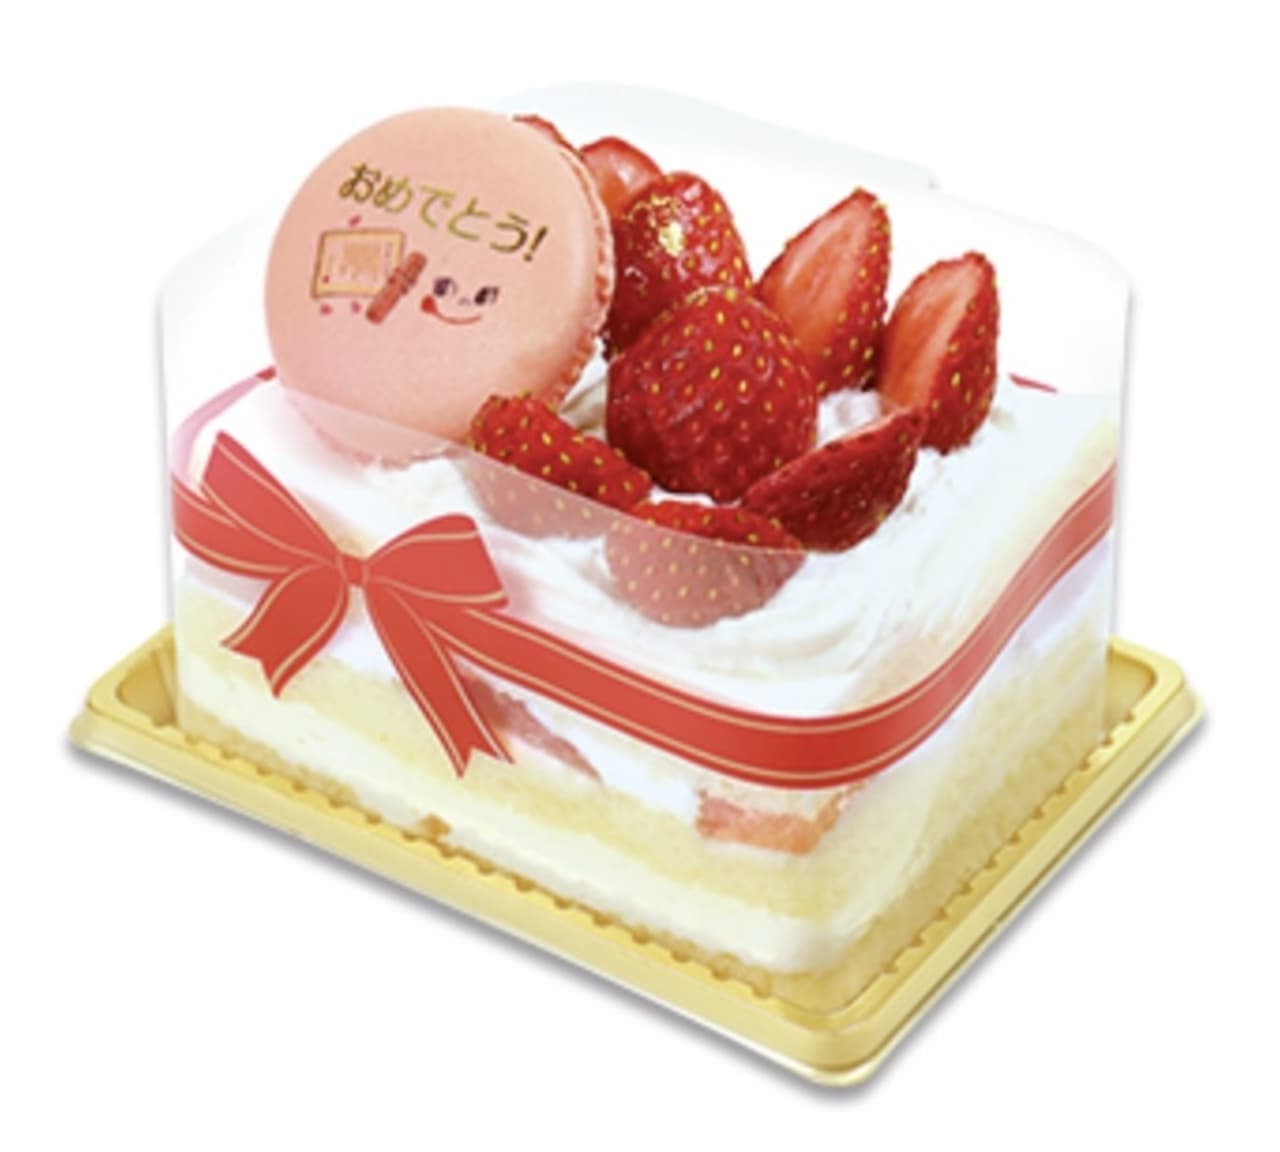 Fujiya "Strawberry Filled Celebration Cake